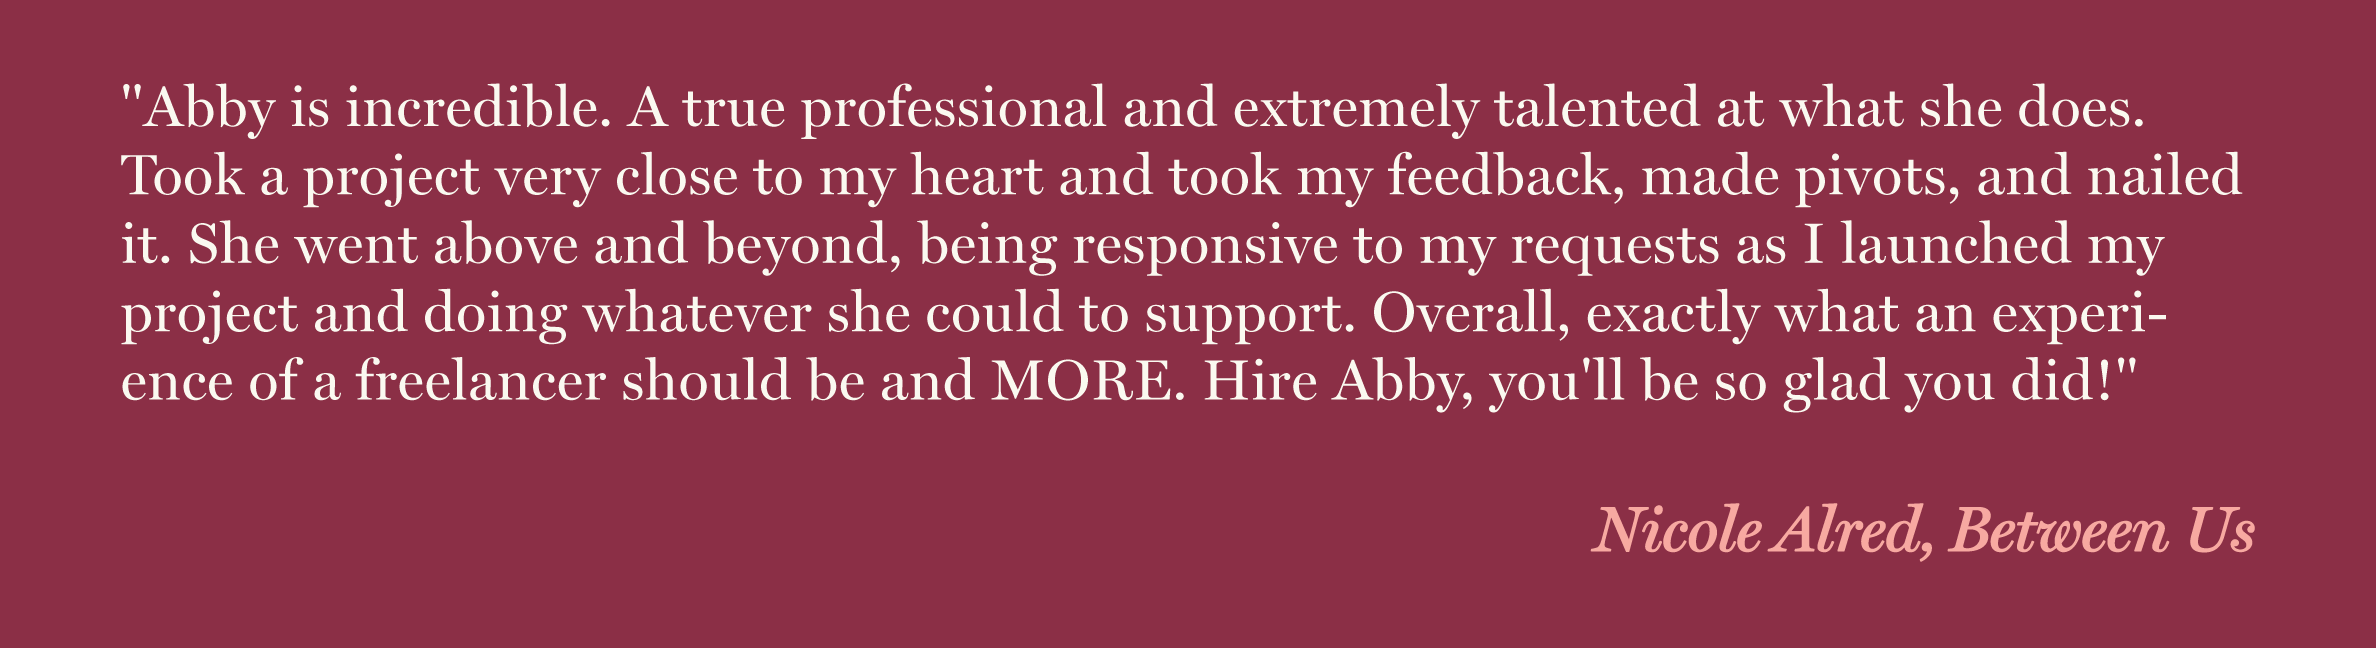  Customer testimonial in praise of Abby Hersey. 